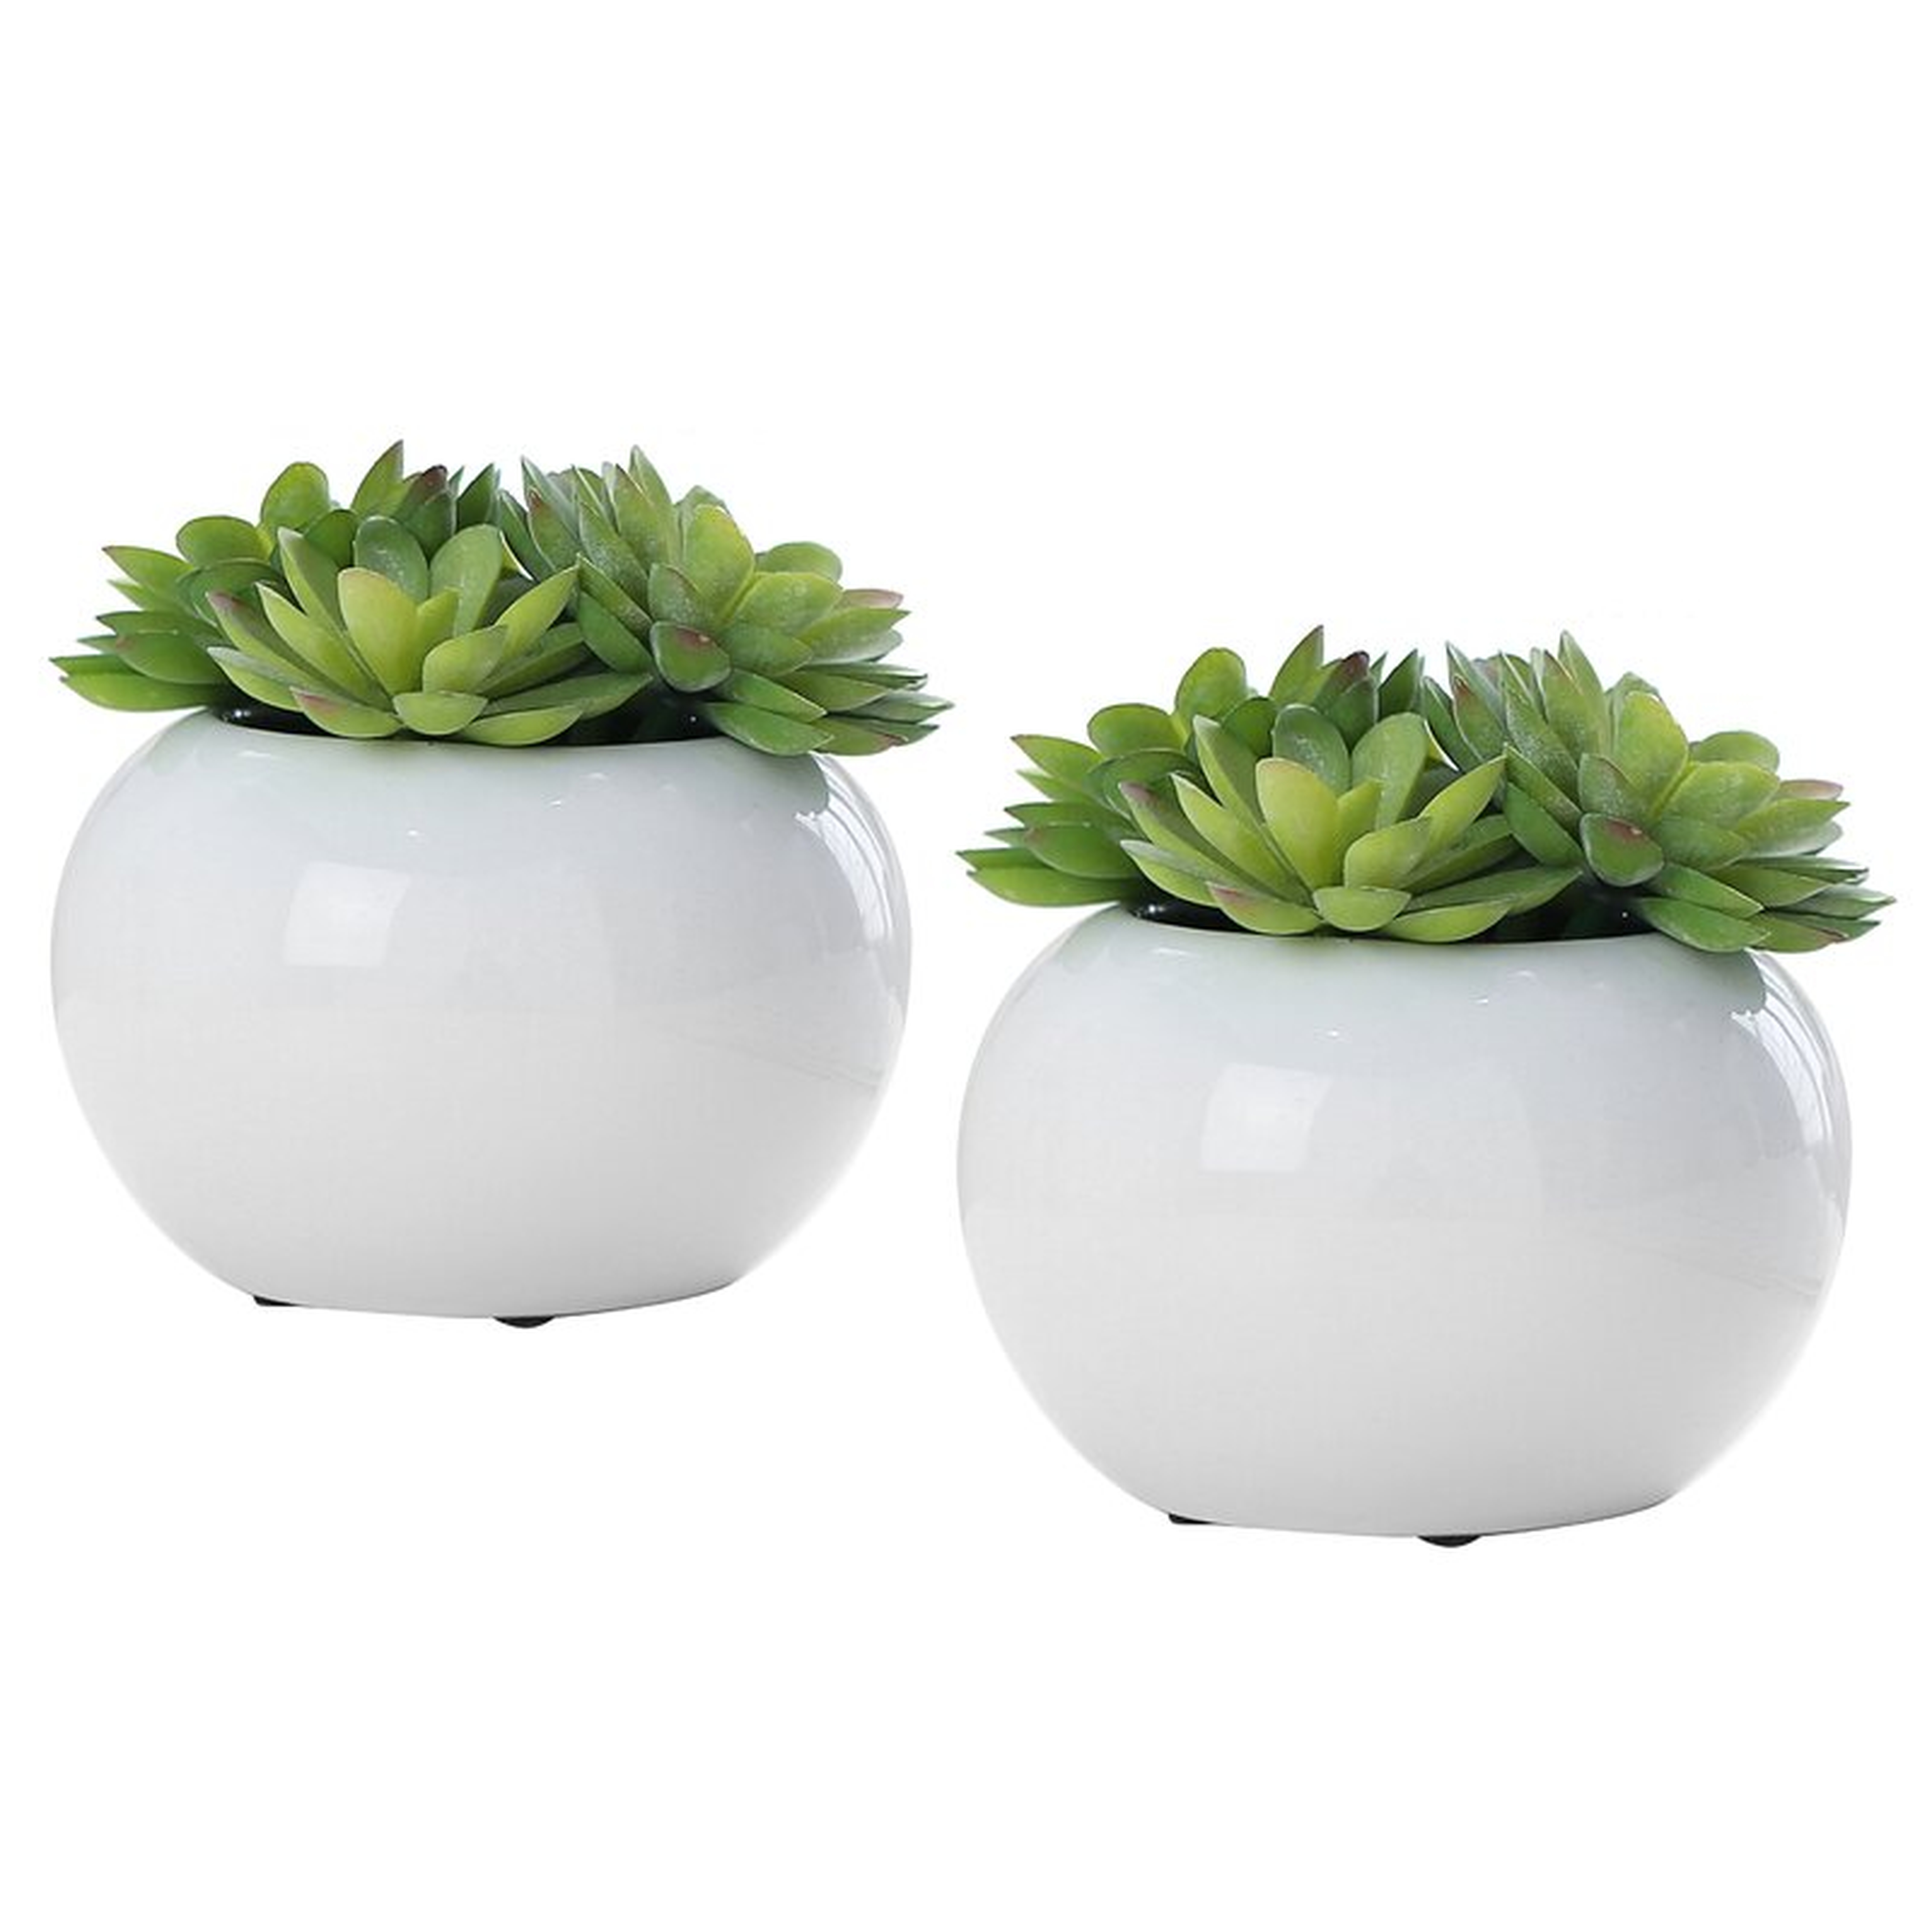 1" Artificial Succulent in Pot (Set of 2) - Wayfair